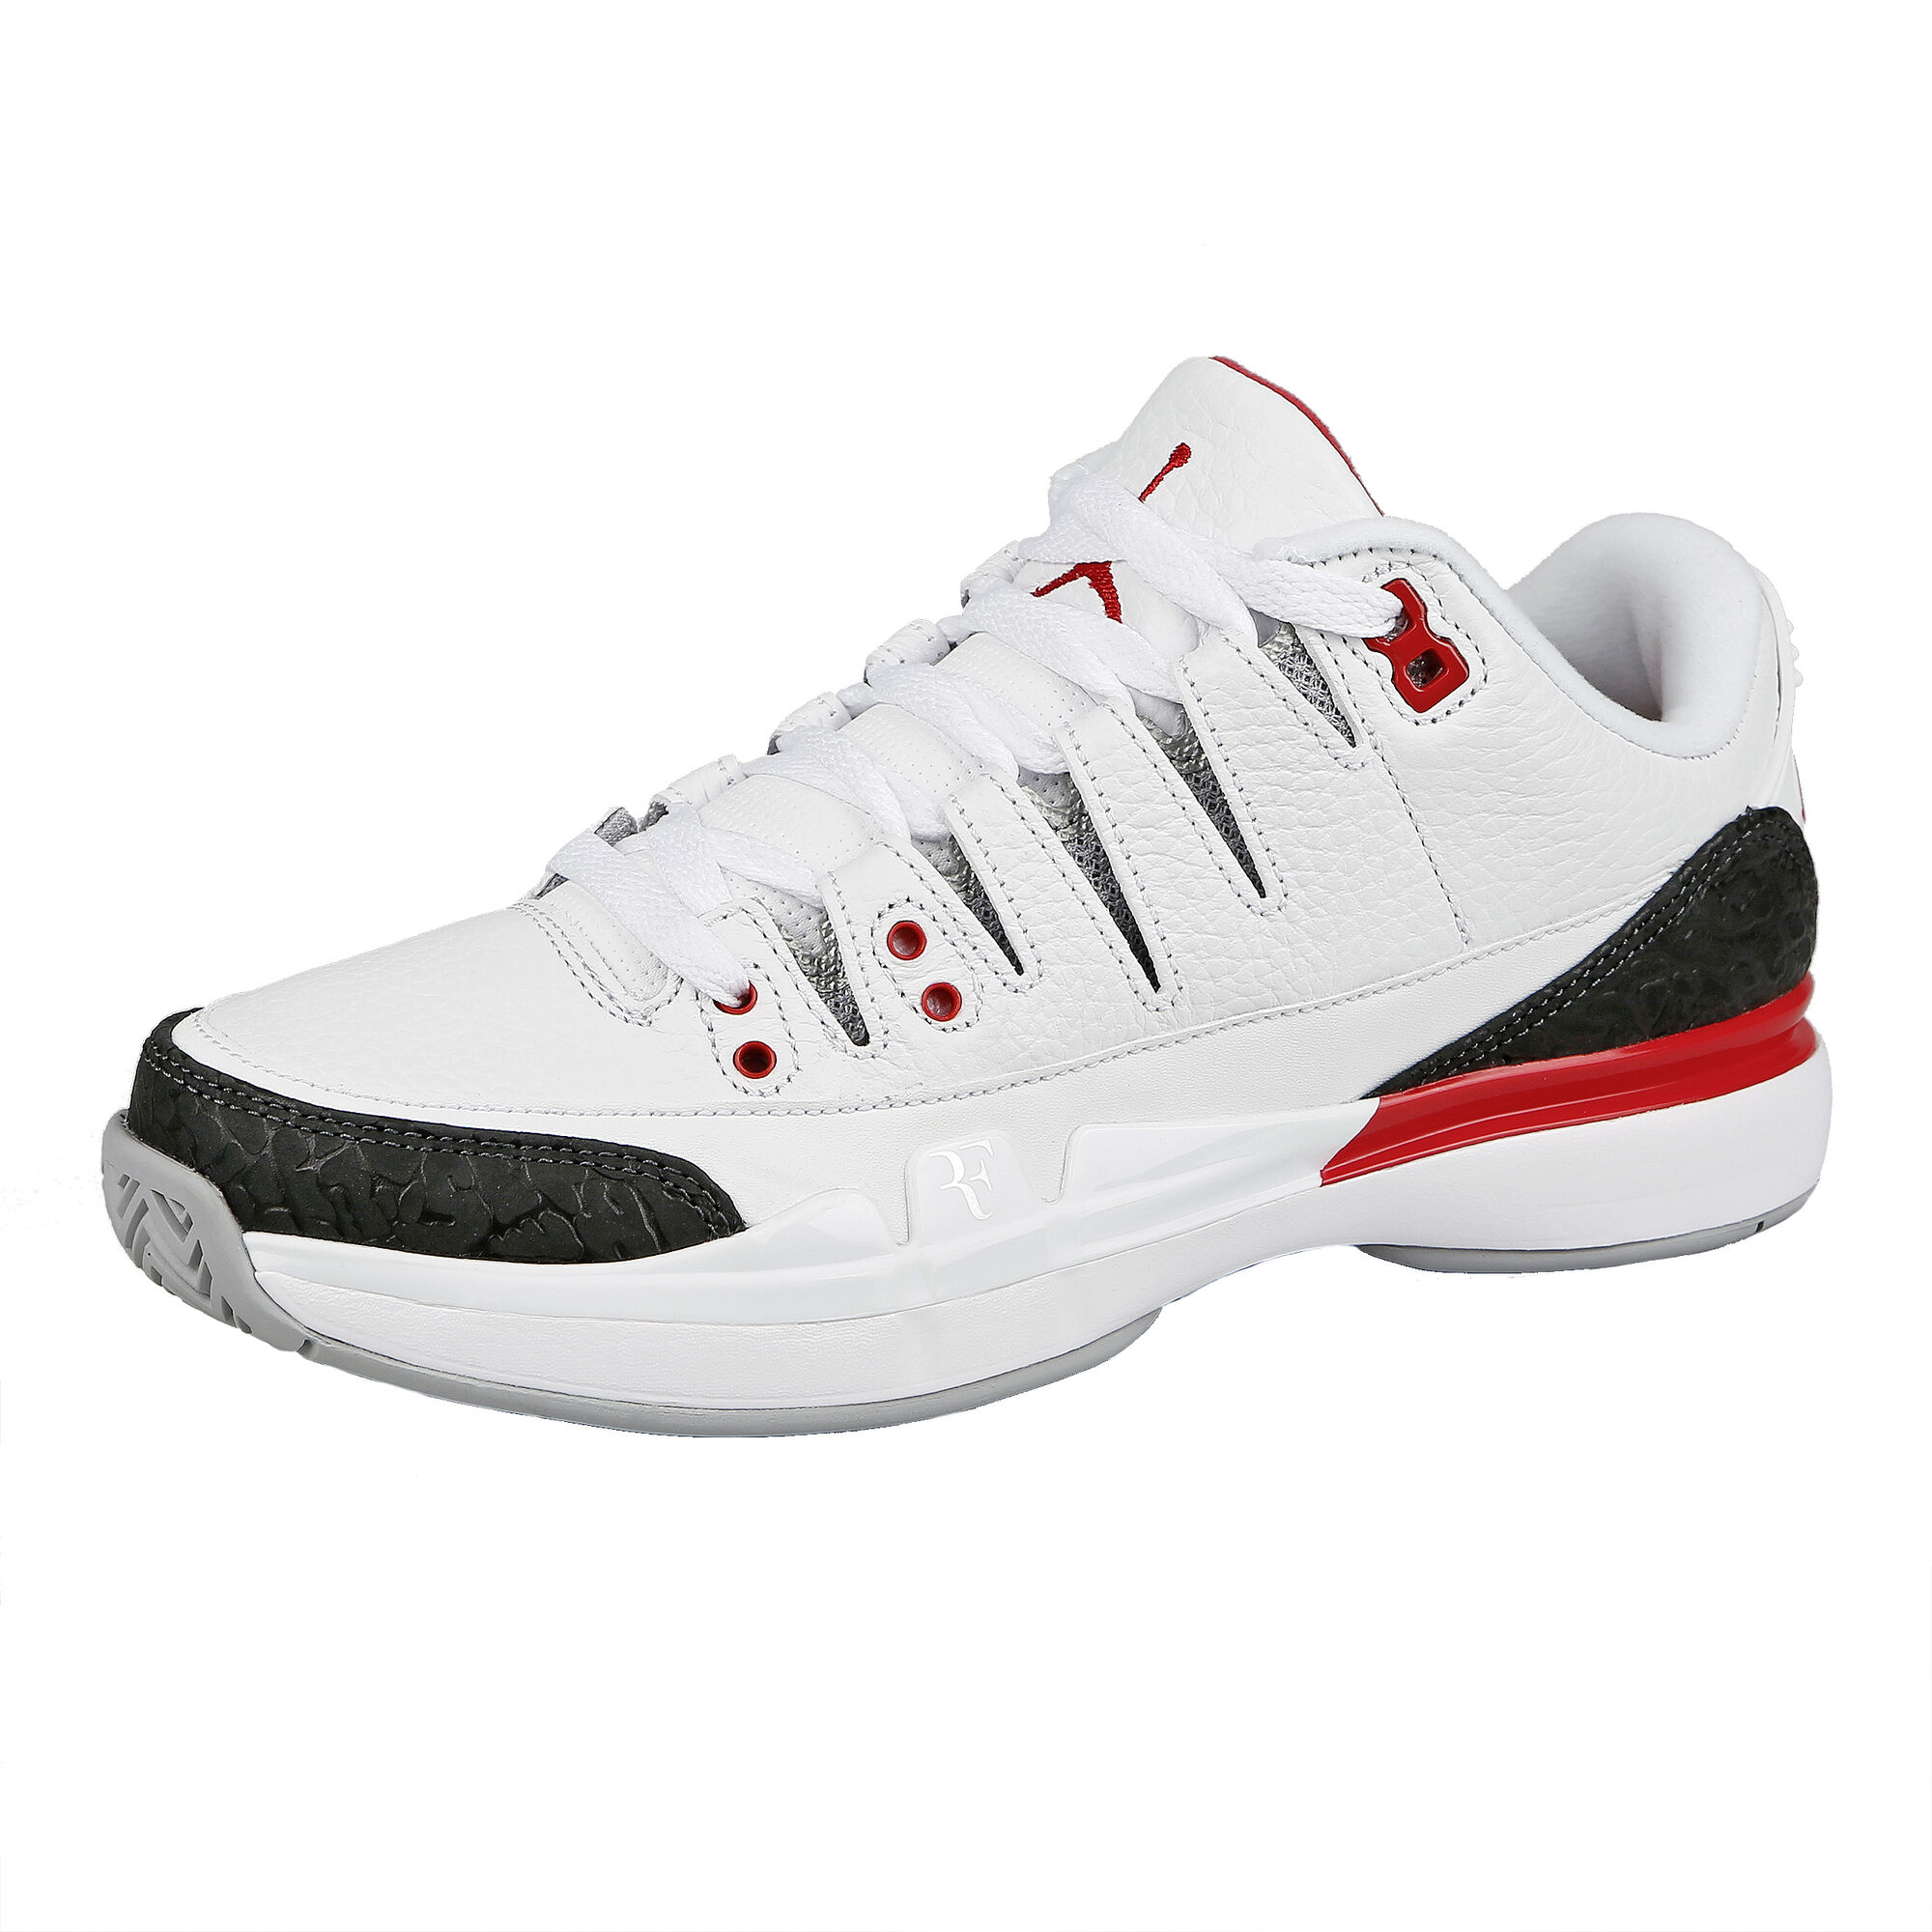 Saqueo pompa Adolescencia buy Nike Roger Federer Zoom Vapor Air Jordan 3 All Court Shoe Men - White,  Black online | Tennis-Point